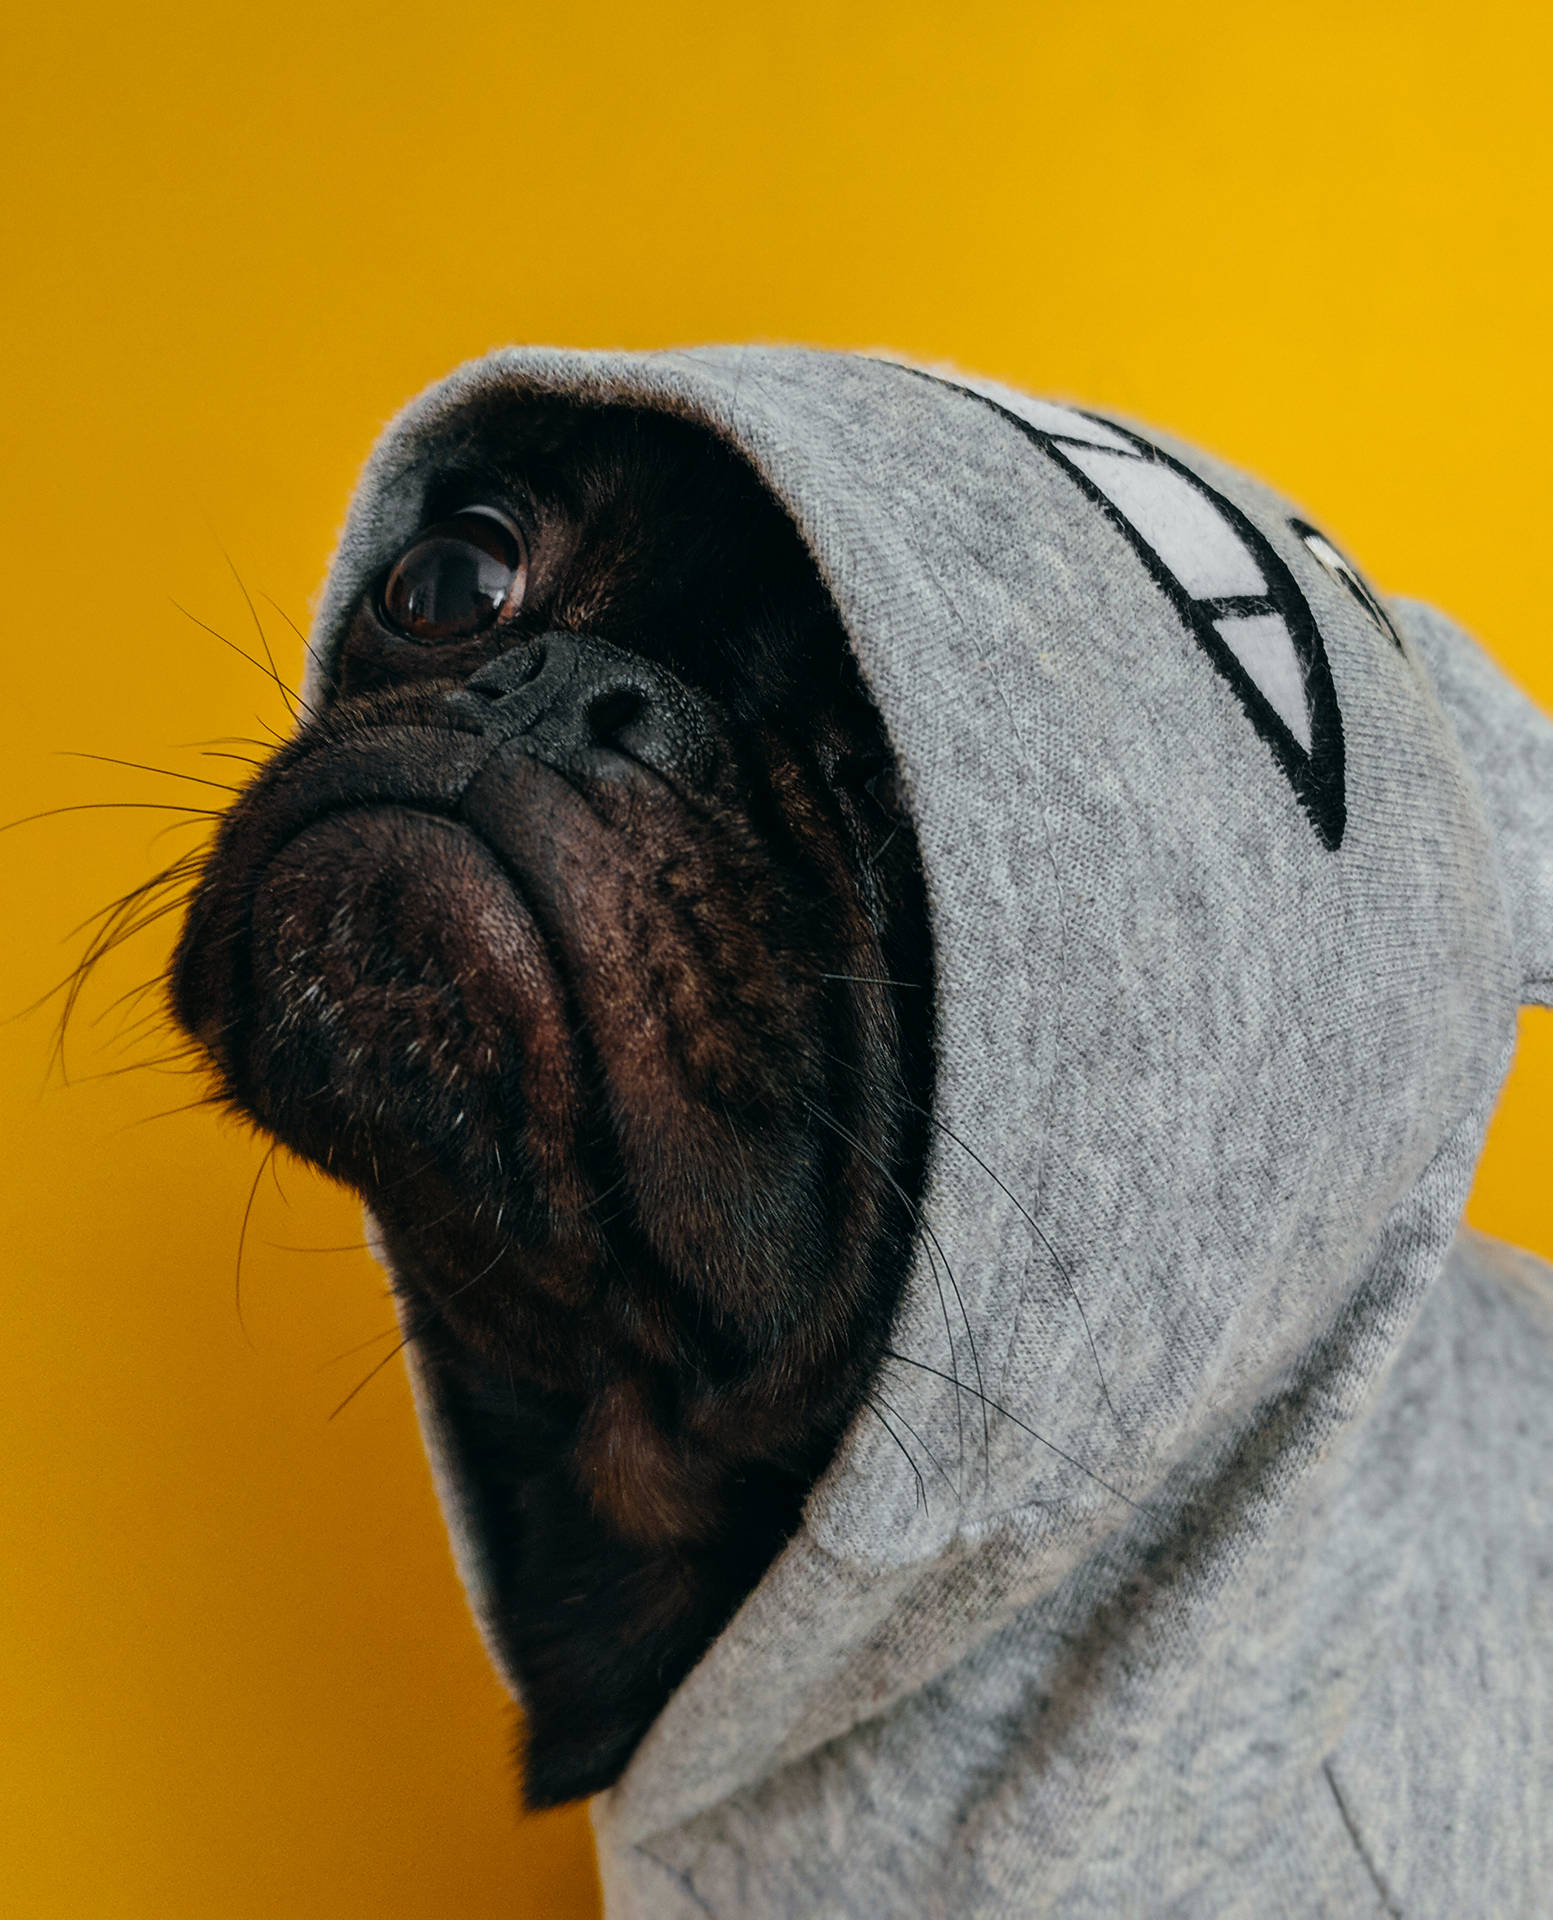 Pet dog in Totoro hoodie wallpaper.